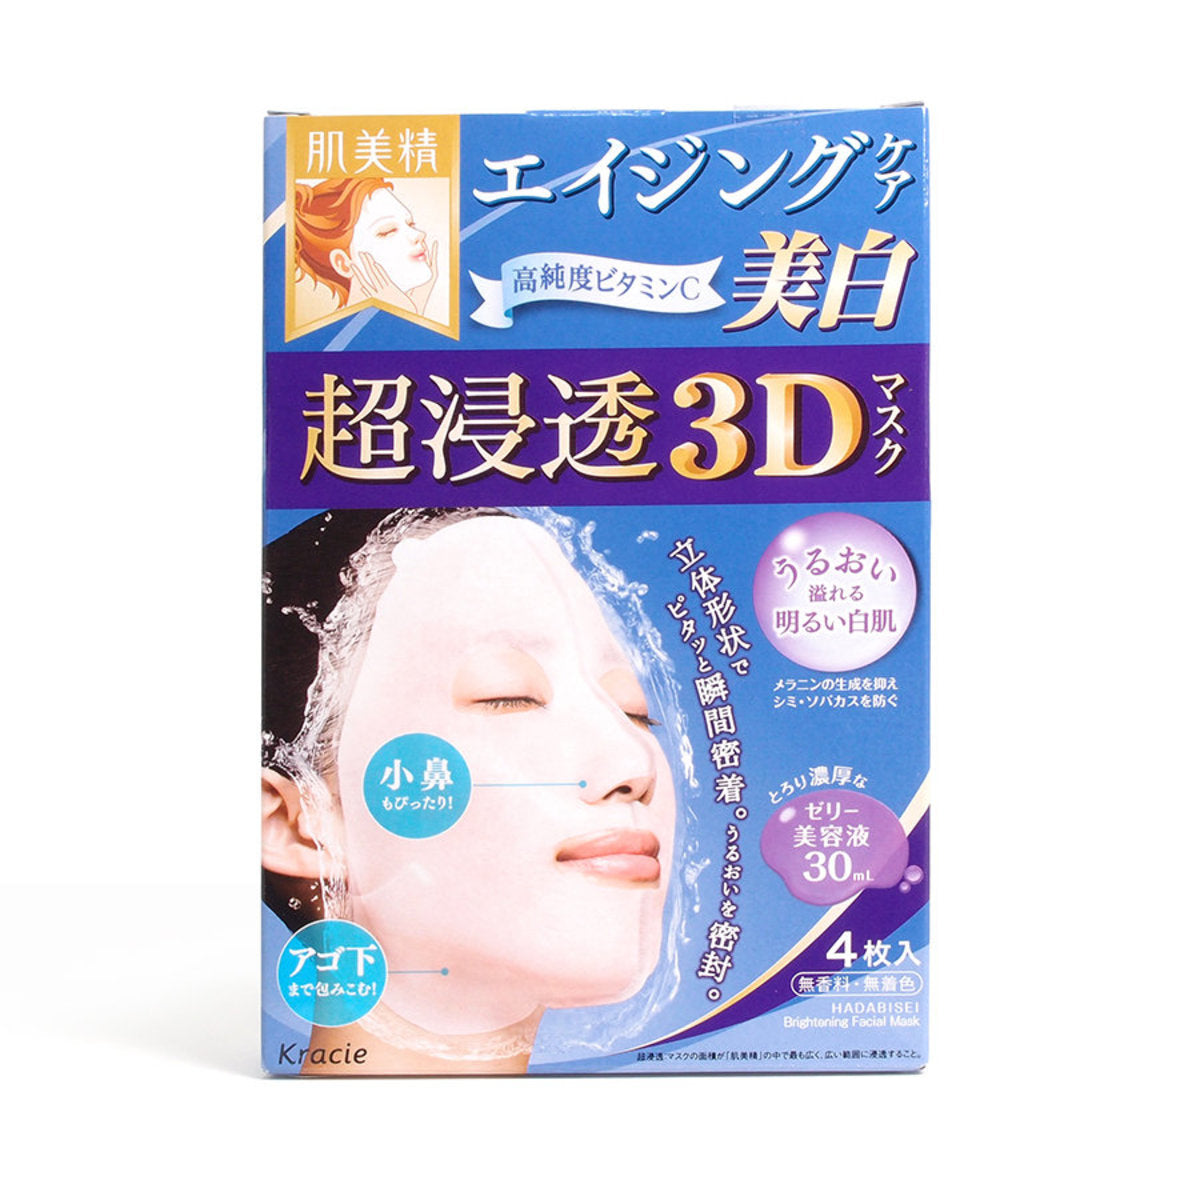 KRACIE Hadabisei 3D Face Mask (Aging-care Brightening)